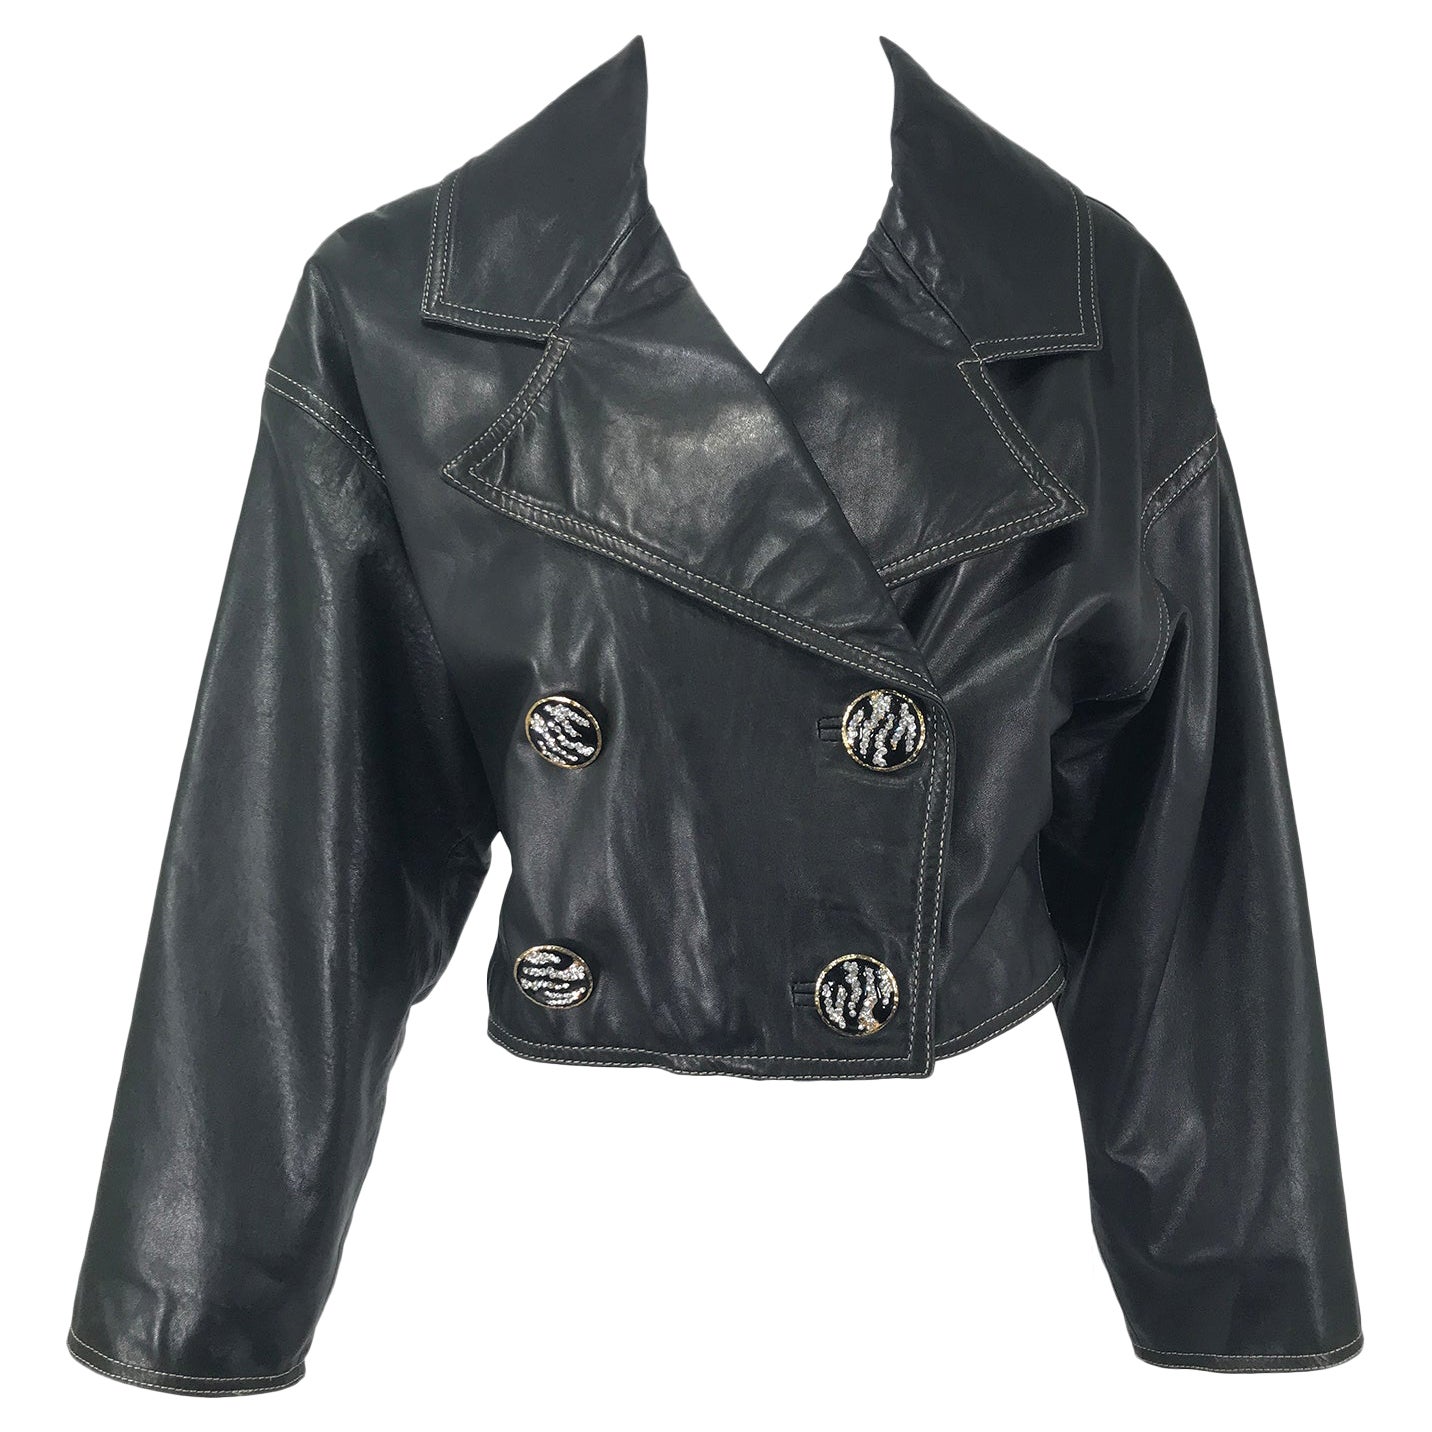 Giorgio's velvet bomber jacket with rhinestone details